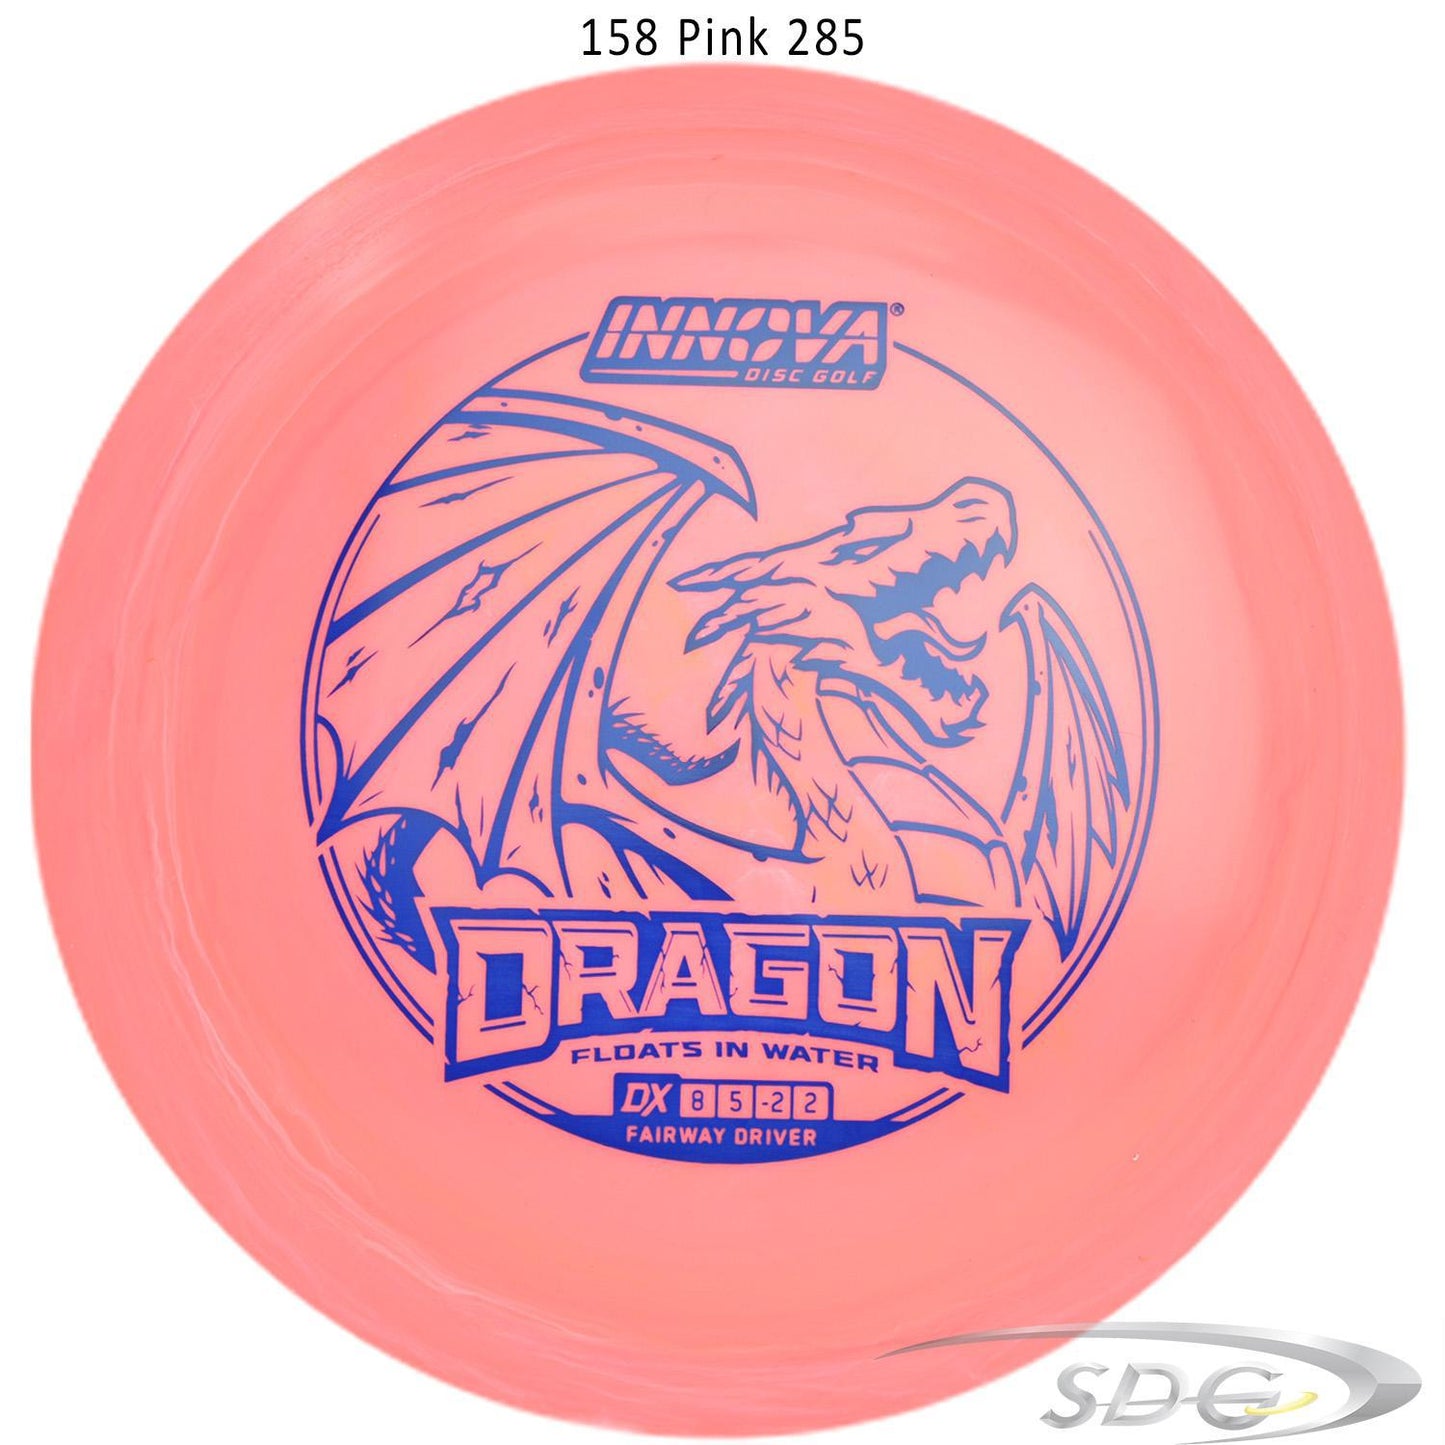 innova-dx-dragon-disc-golf-fairway-driver 158 Pink 285 